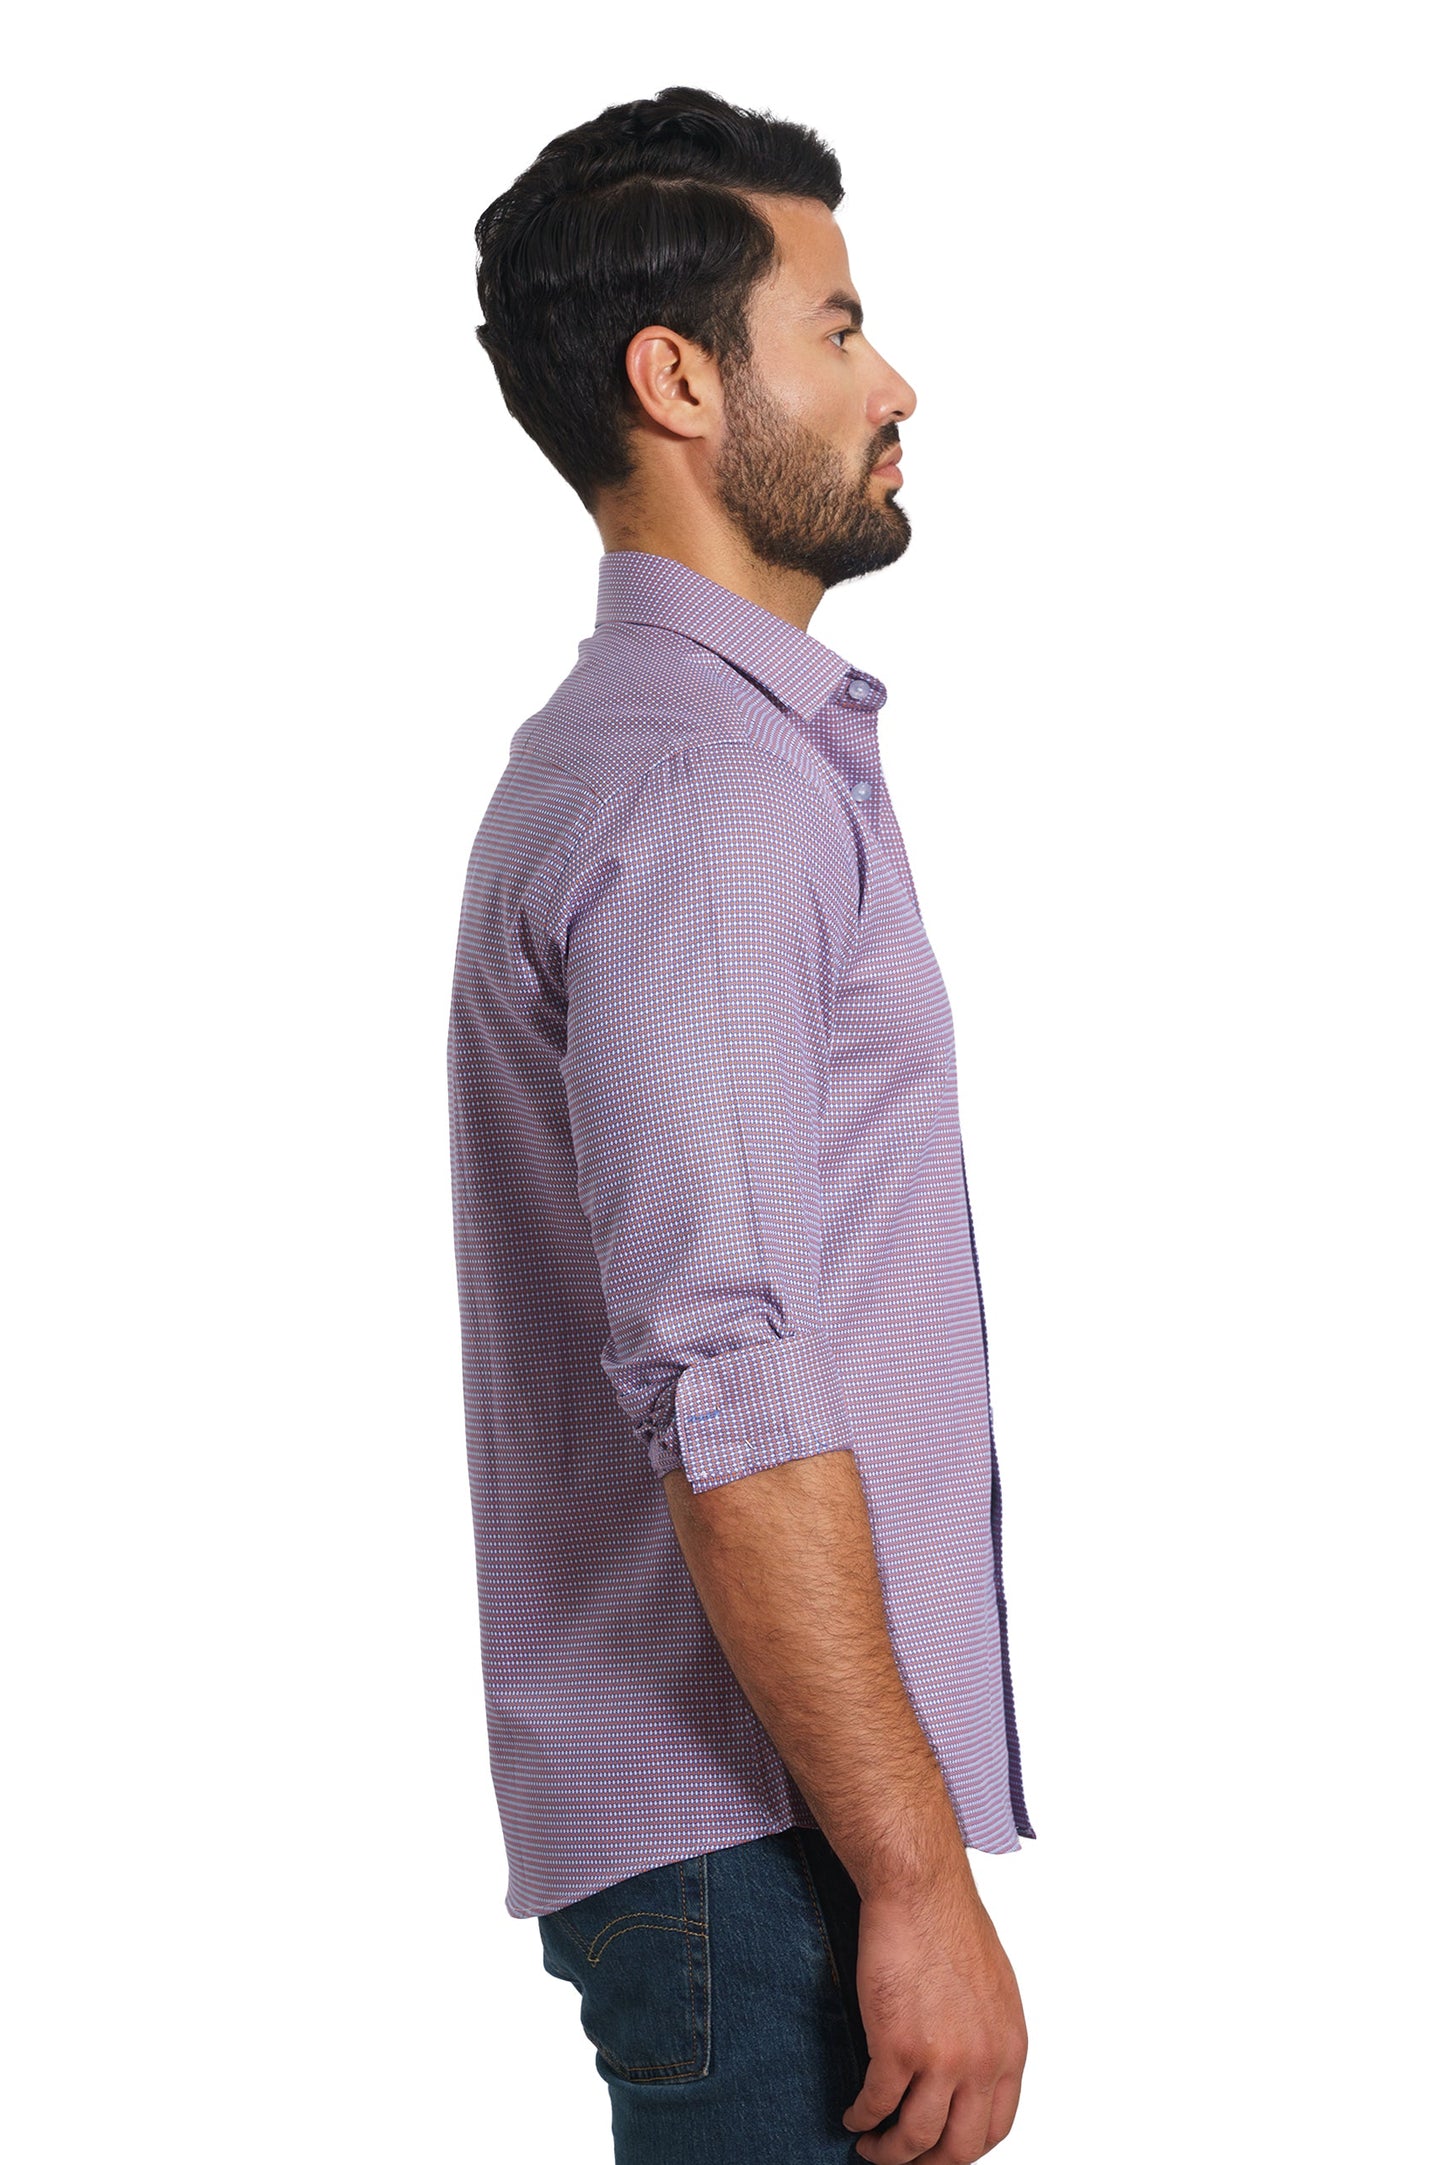 Blue Print Long Sleeve Shirt TH-2860 Side